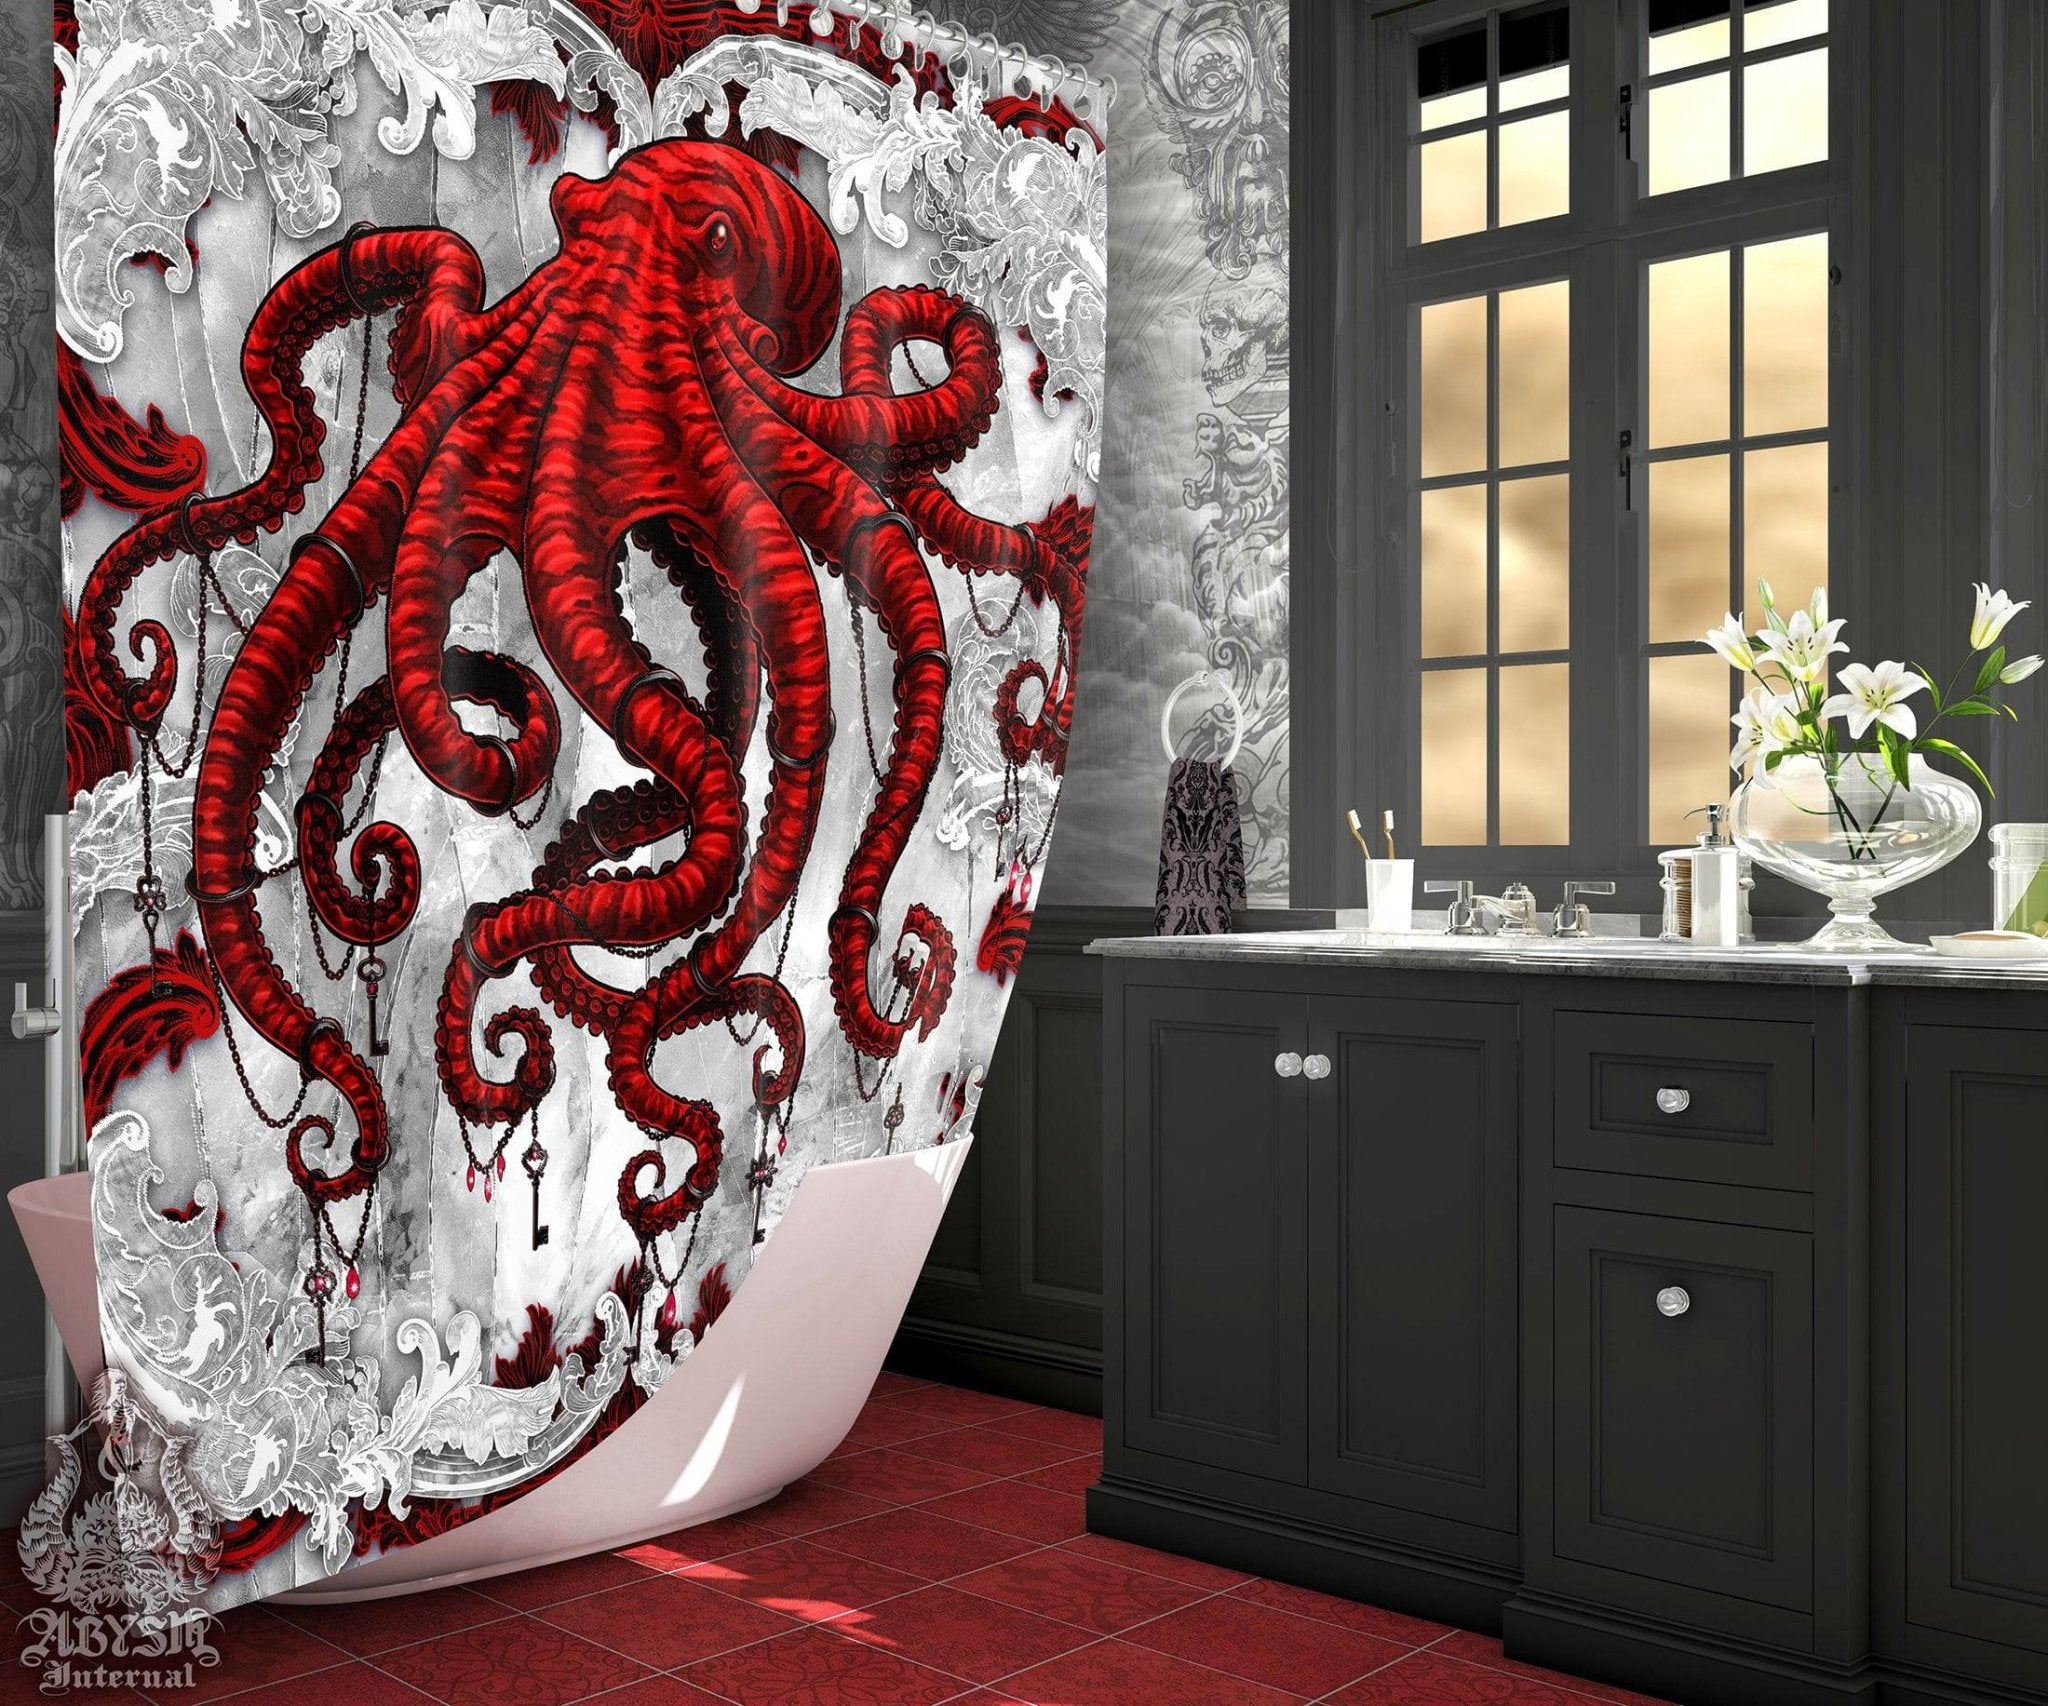 Octopus Shower Curtain, Gothic Bathroom Decor - Bloody - Abysm Internal